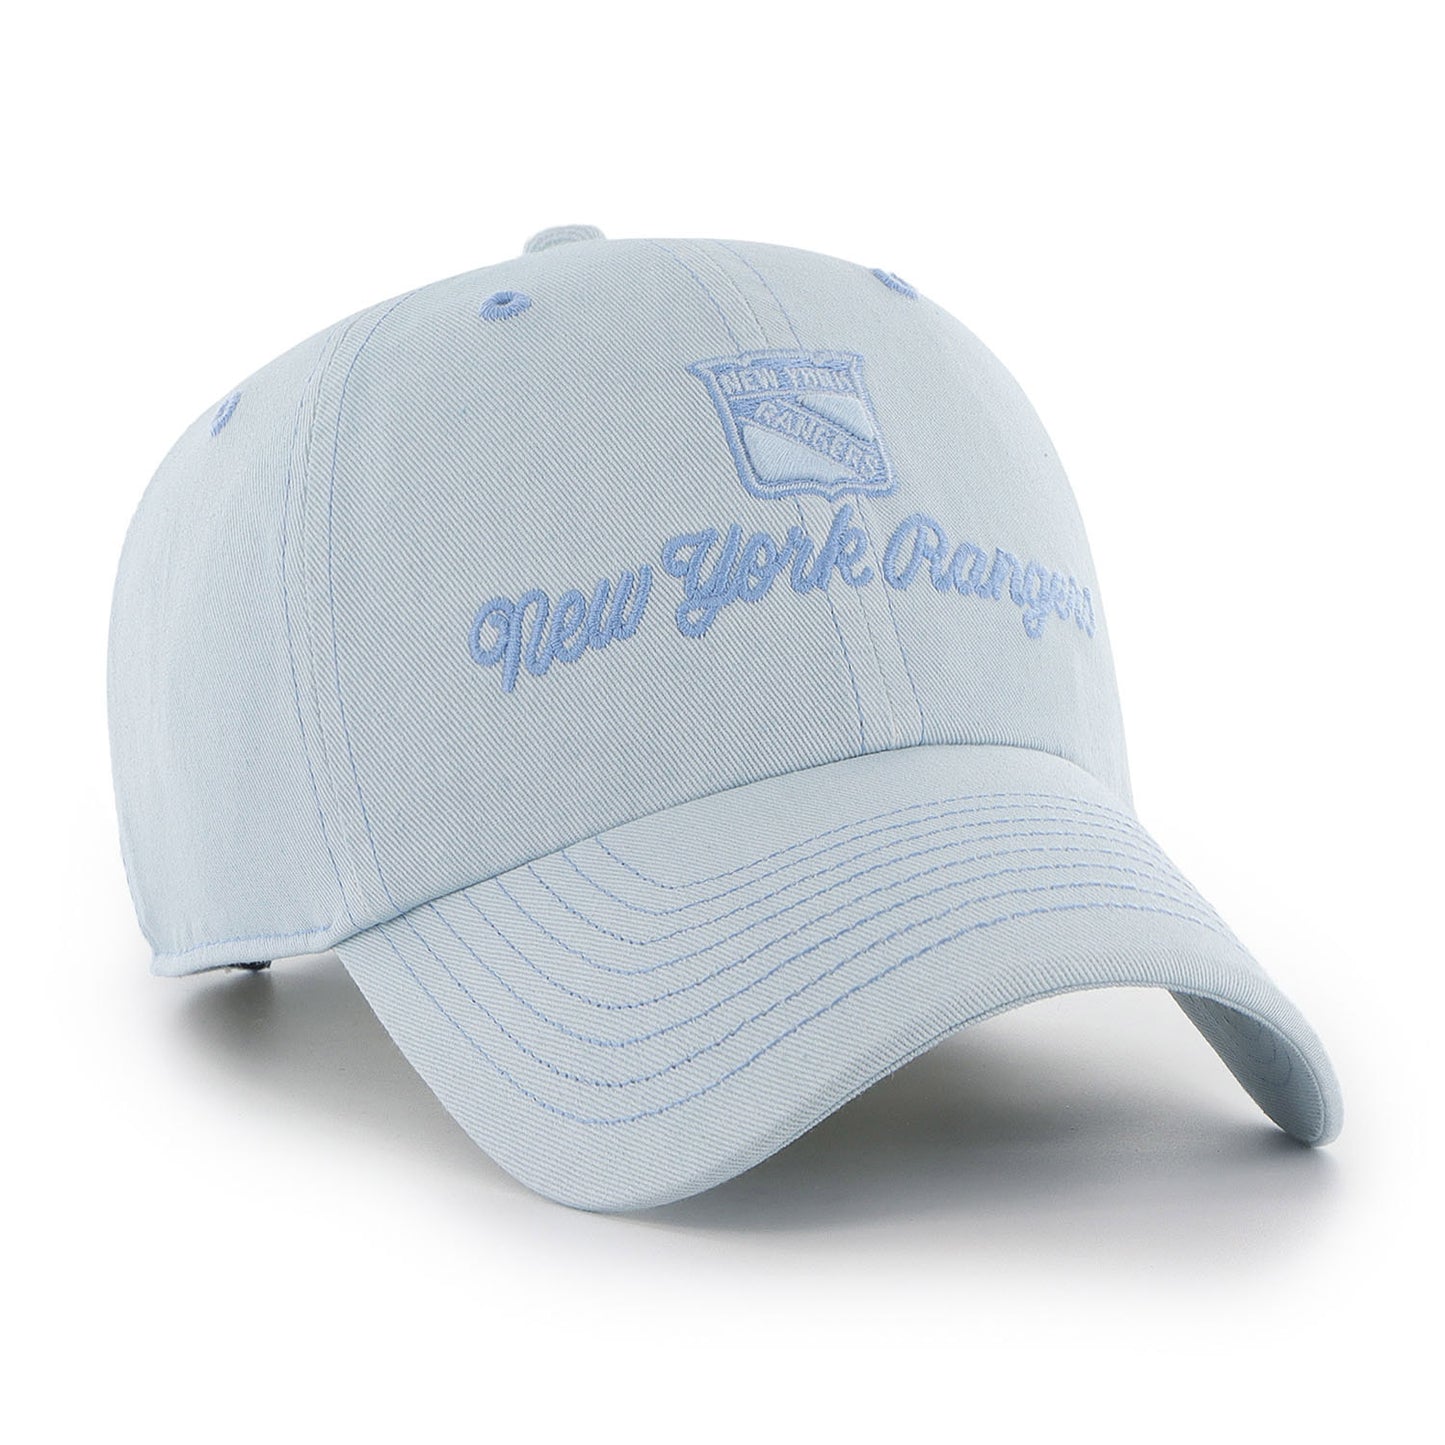 Women's '47 Brand Rangers Blue Haze Clean Up Hat - Front View